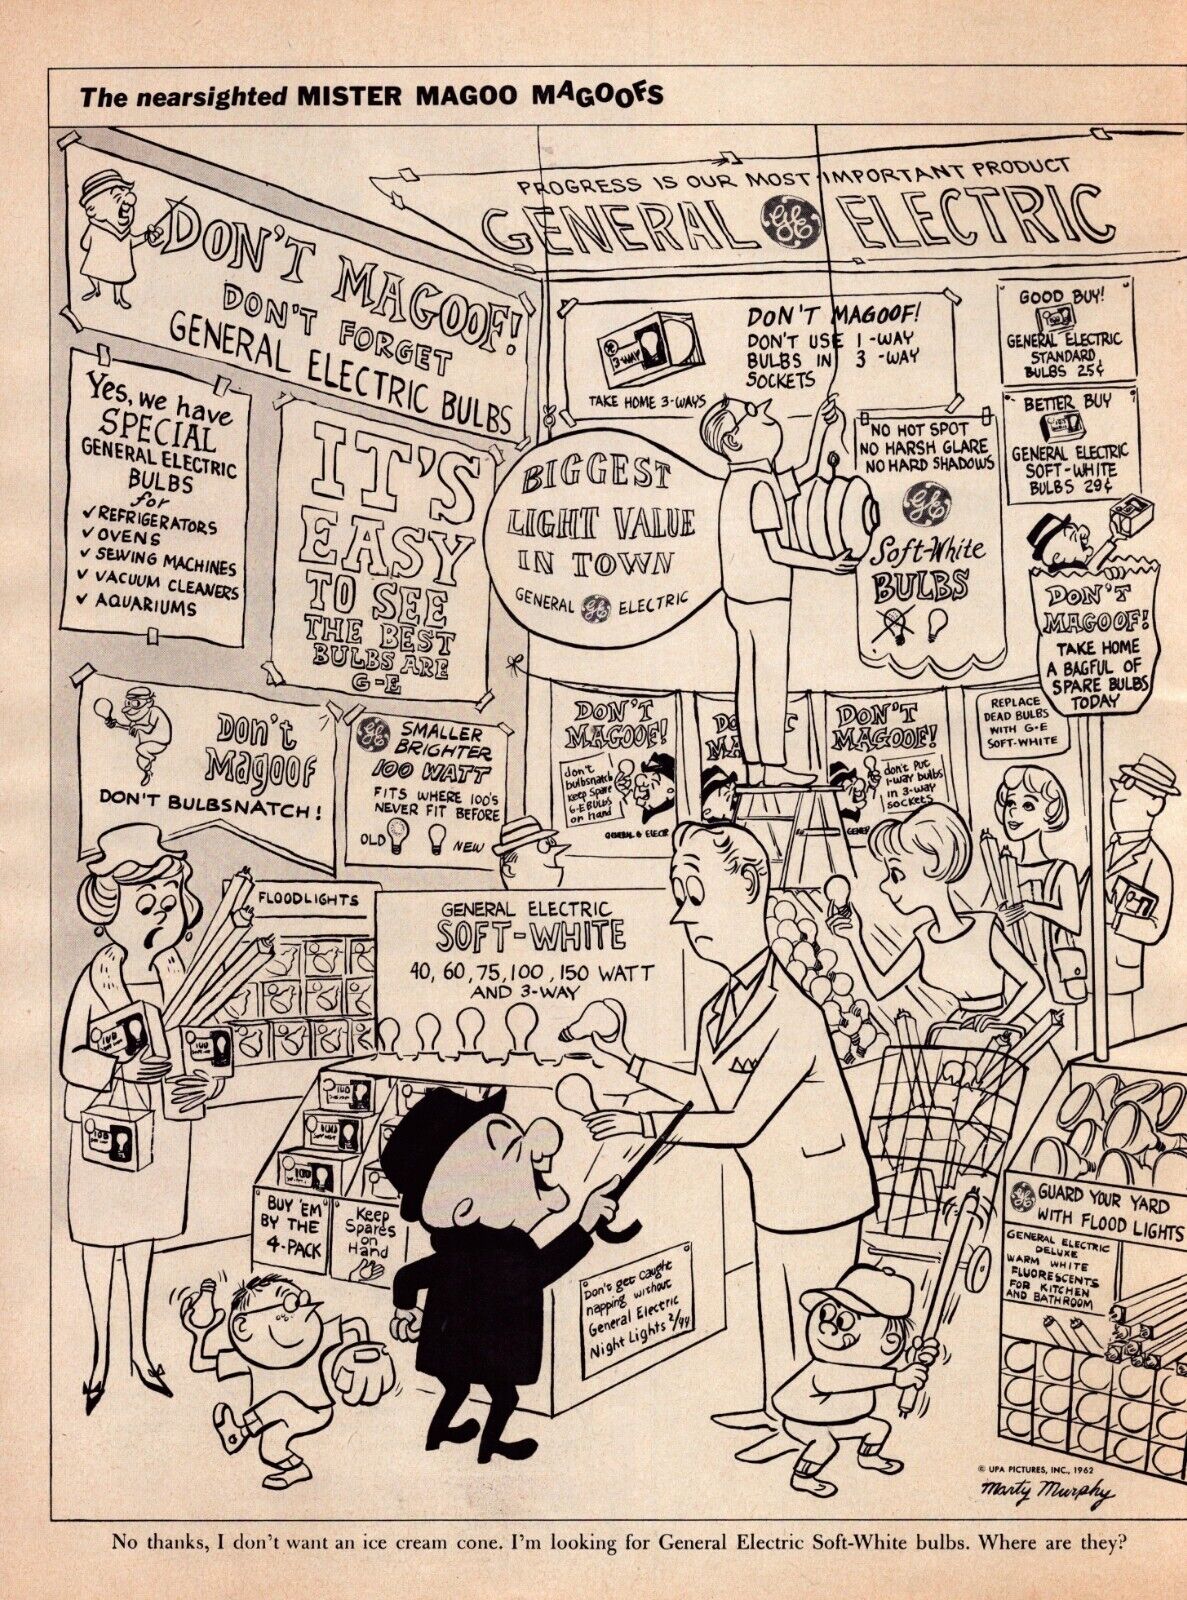 1962 GE Lightbulbs Print Ad Mr. Magoo Comic Nearsighted Cane